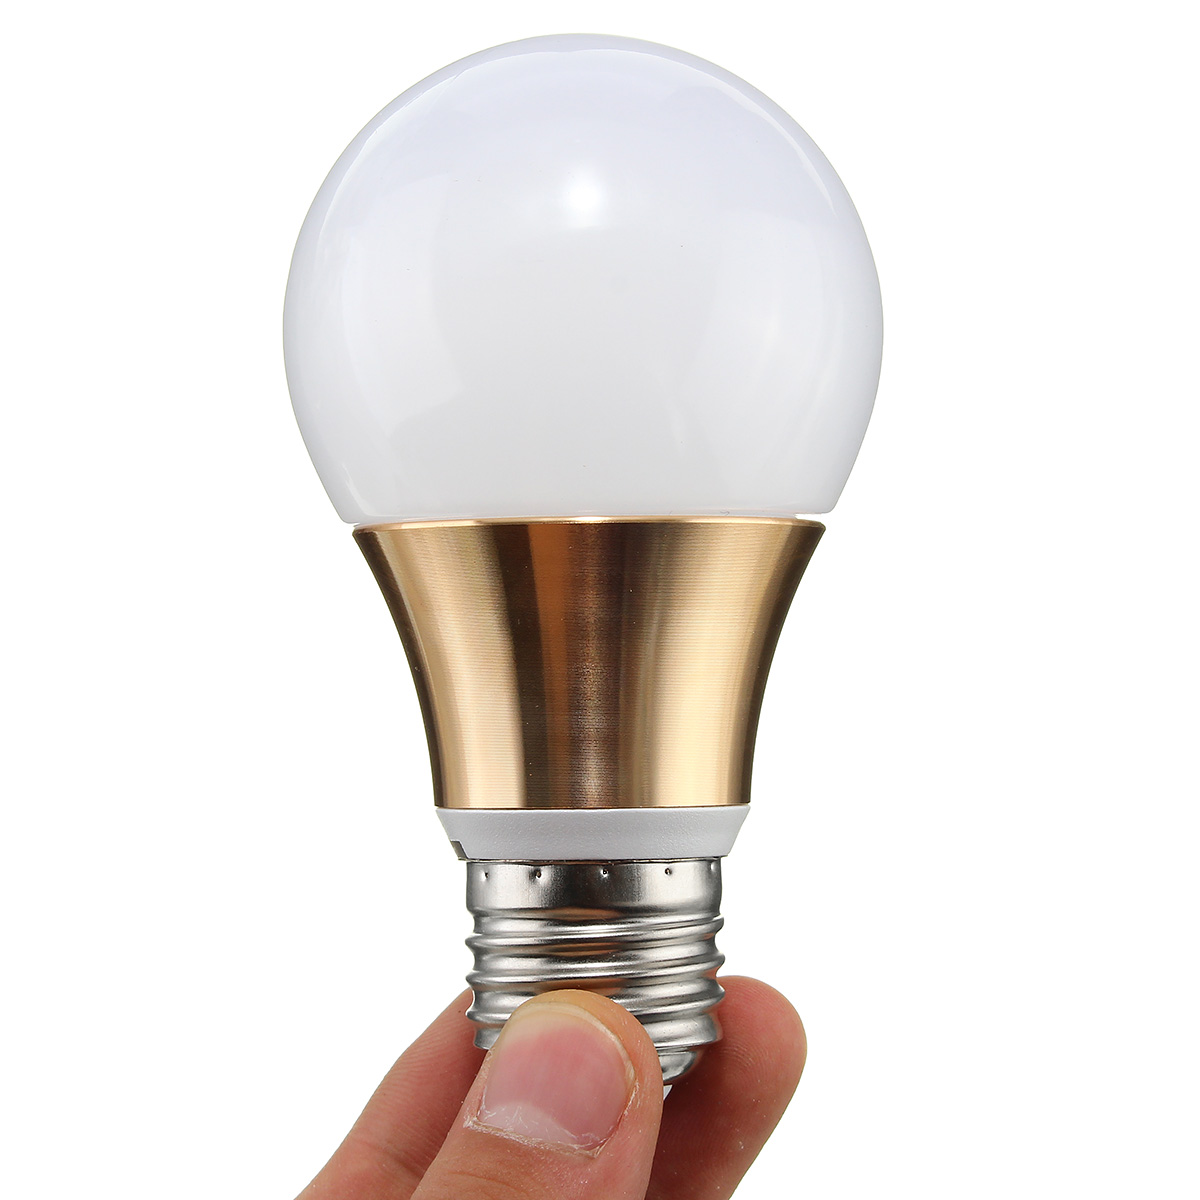 Dimmable-E27-B22-5W-10-SMD-5730-LED-Pure-White-Warm-White-Globe-Lighting-Bulb-AC220V-1100665